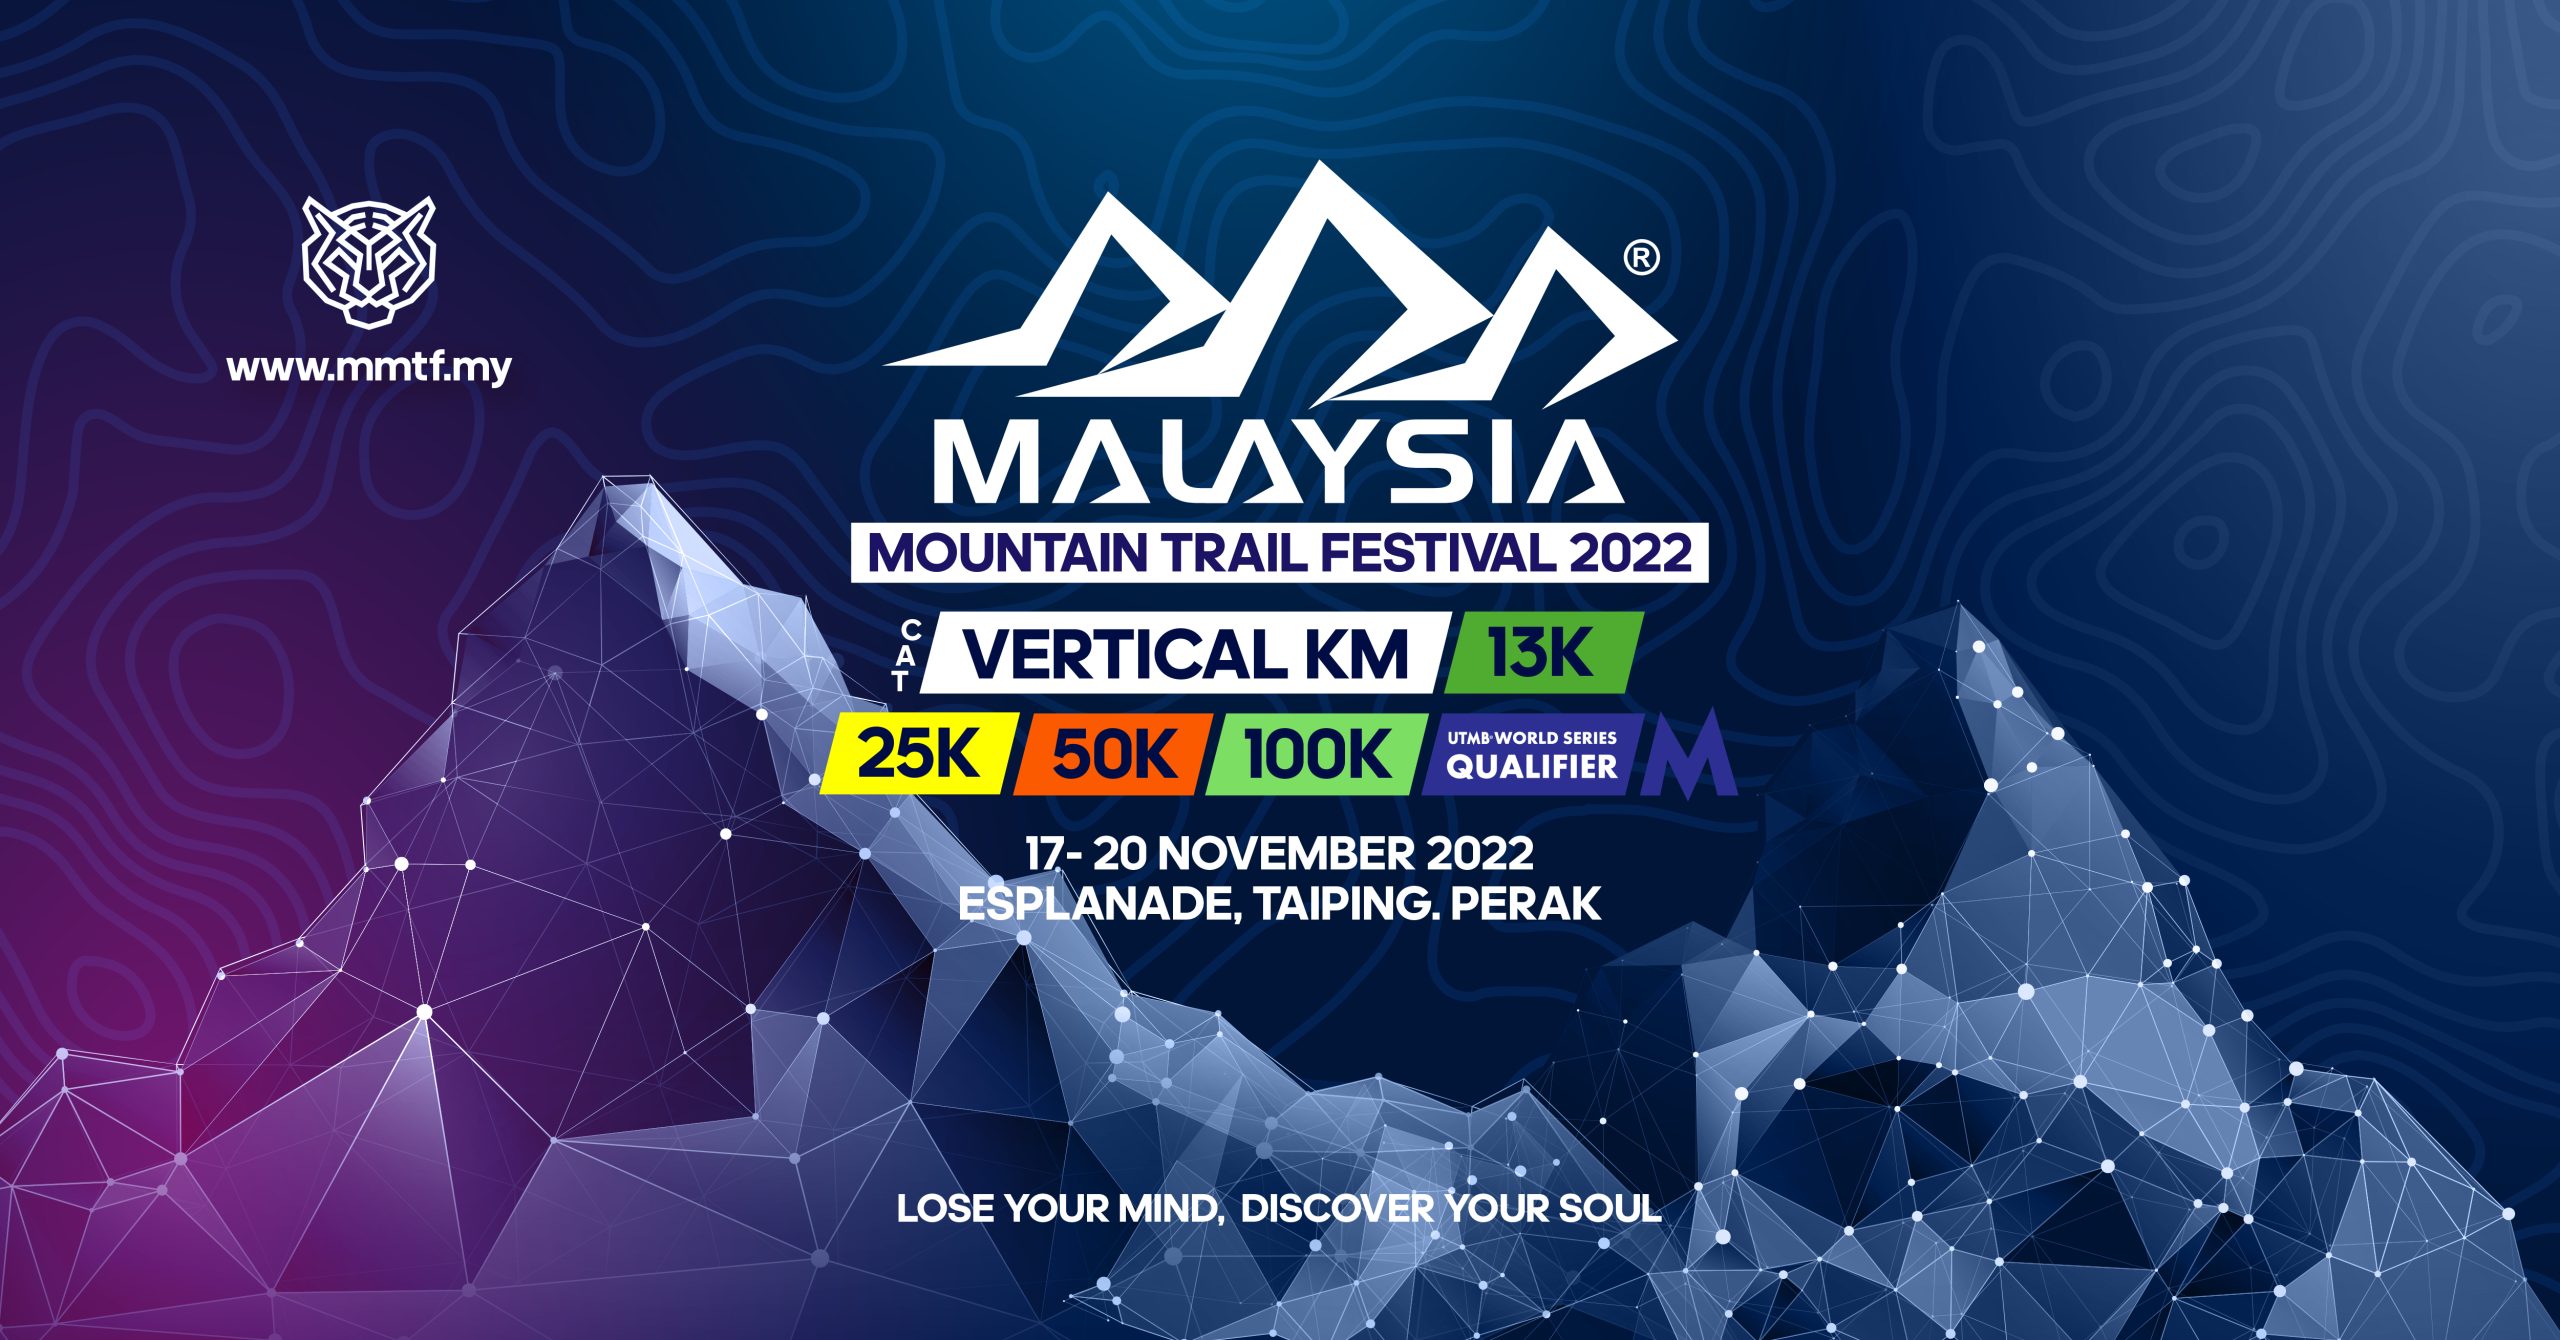 MALAYSIA MOUNTAIN TRAIL FESTIVAL 2022 MMTF